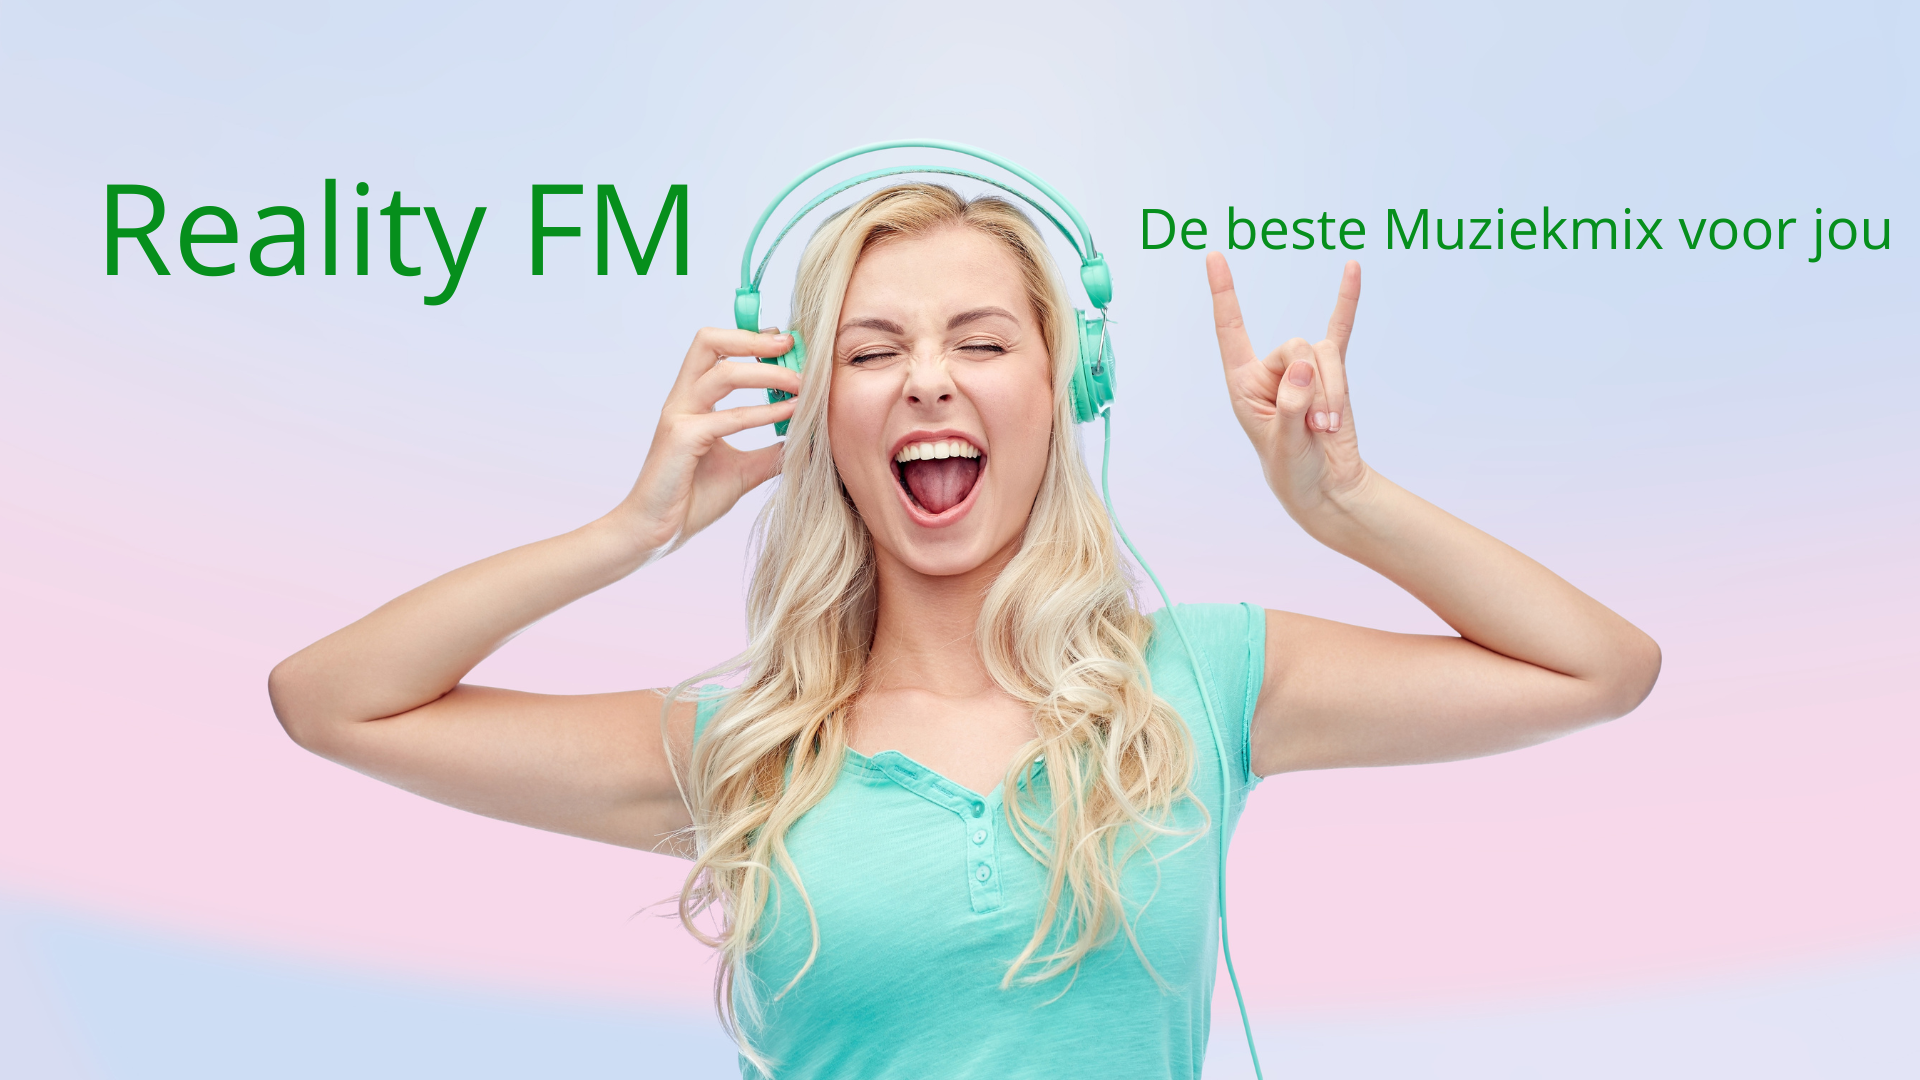 www.realityfm.nl  De beste Muziekmix voor jou !!